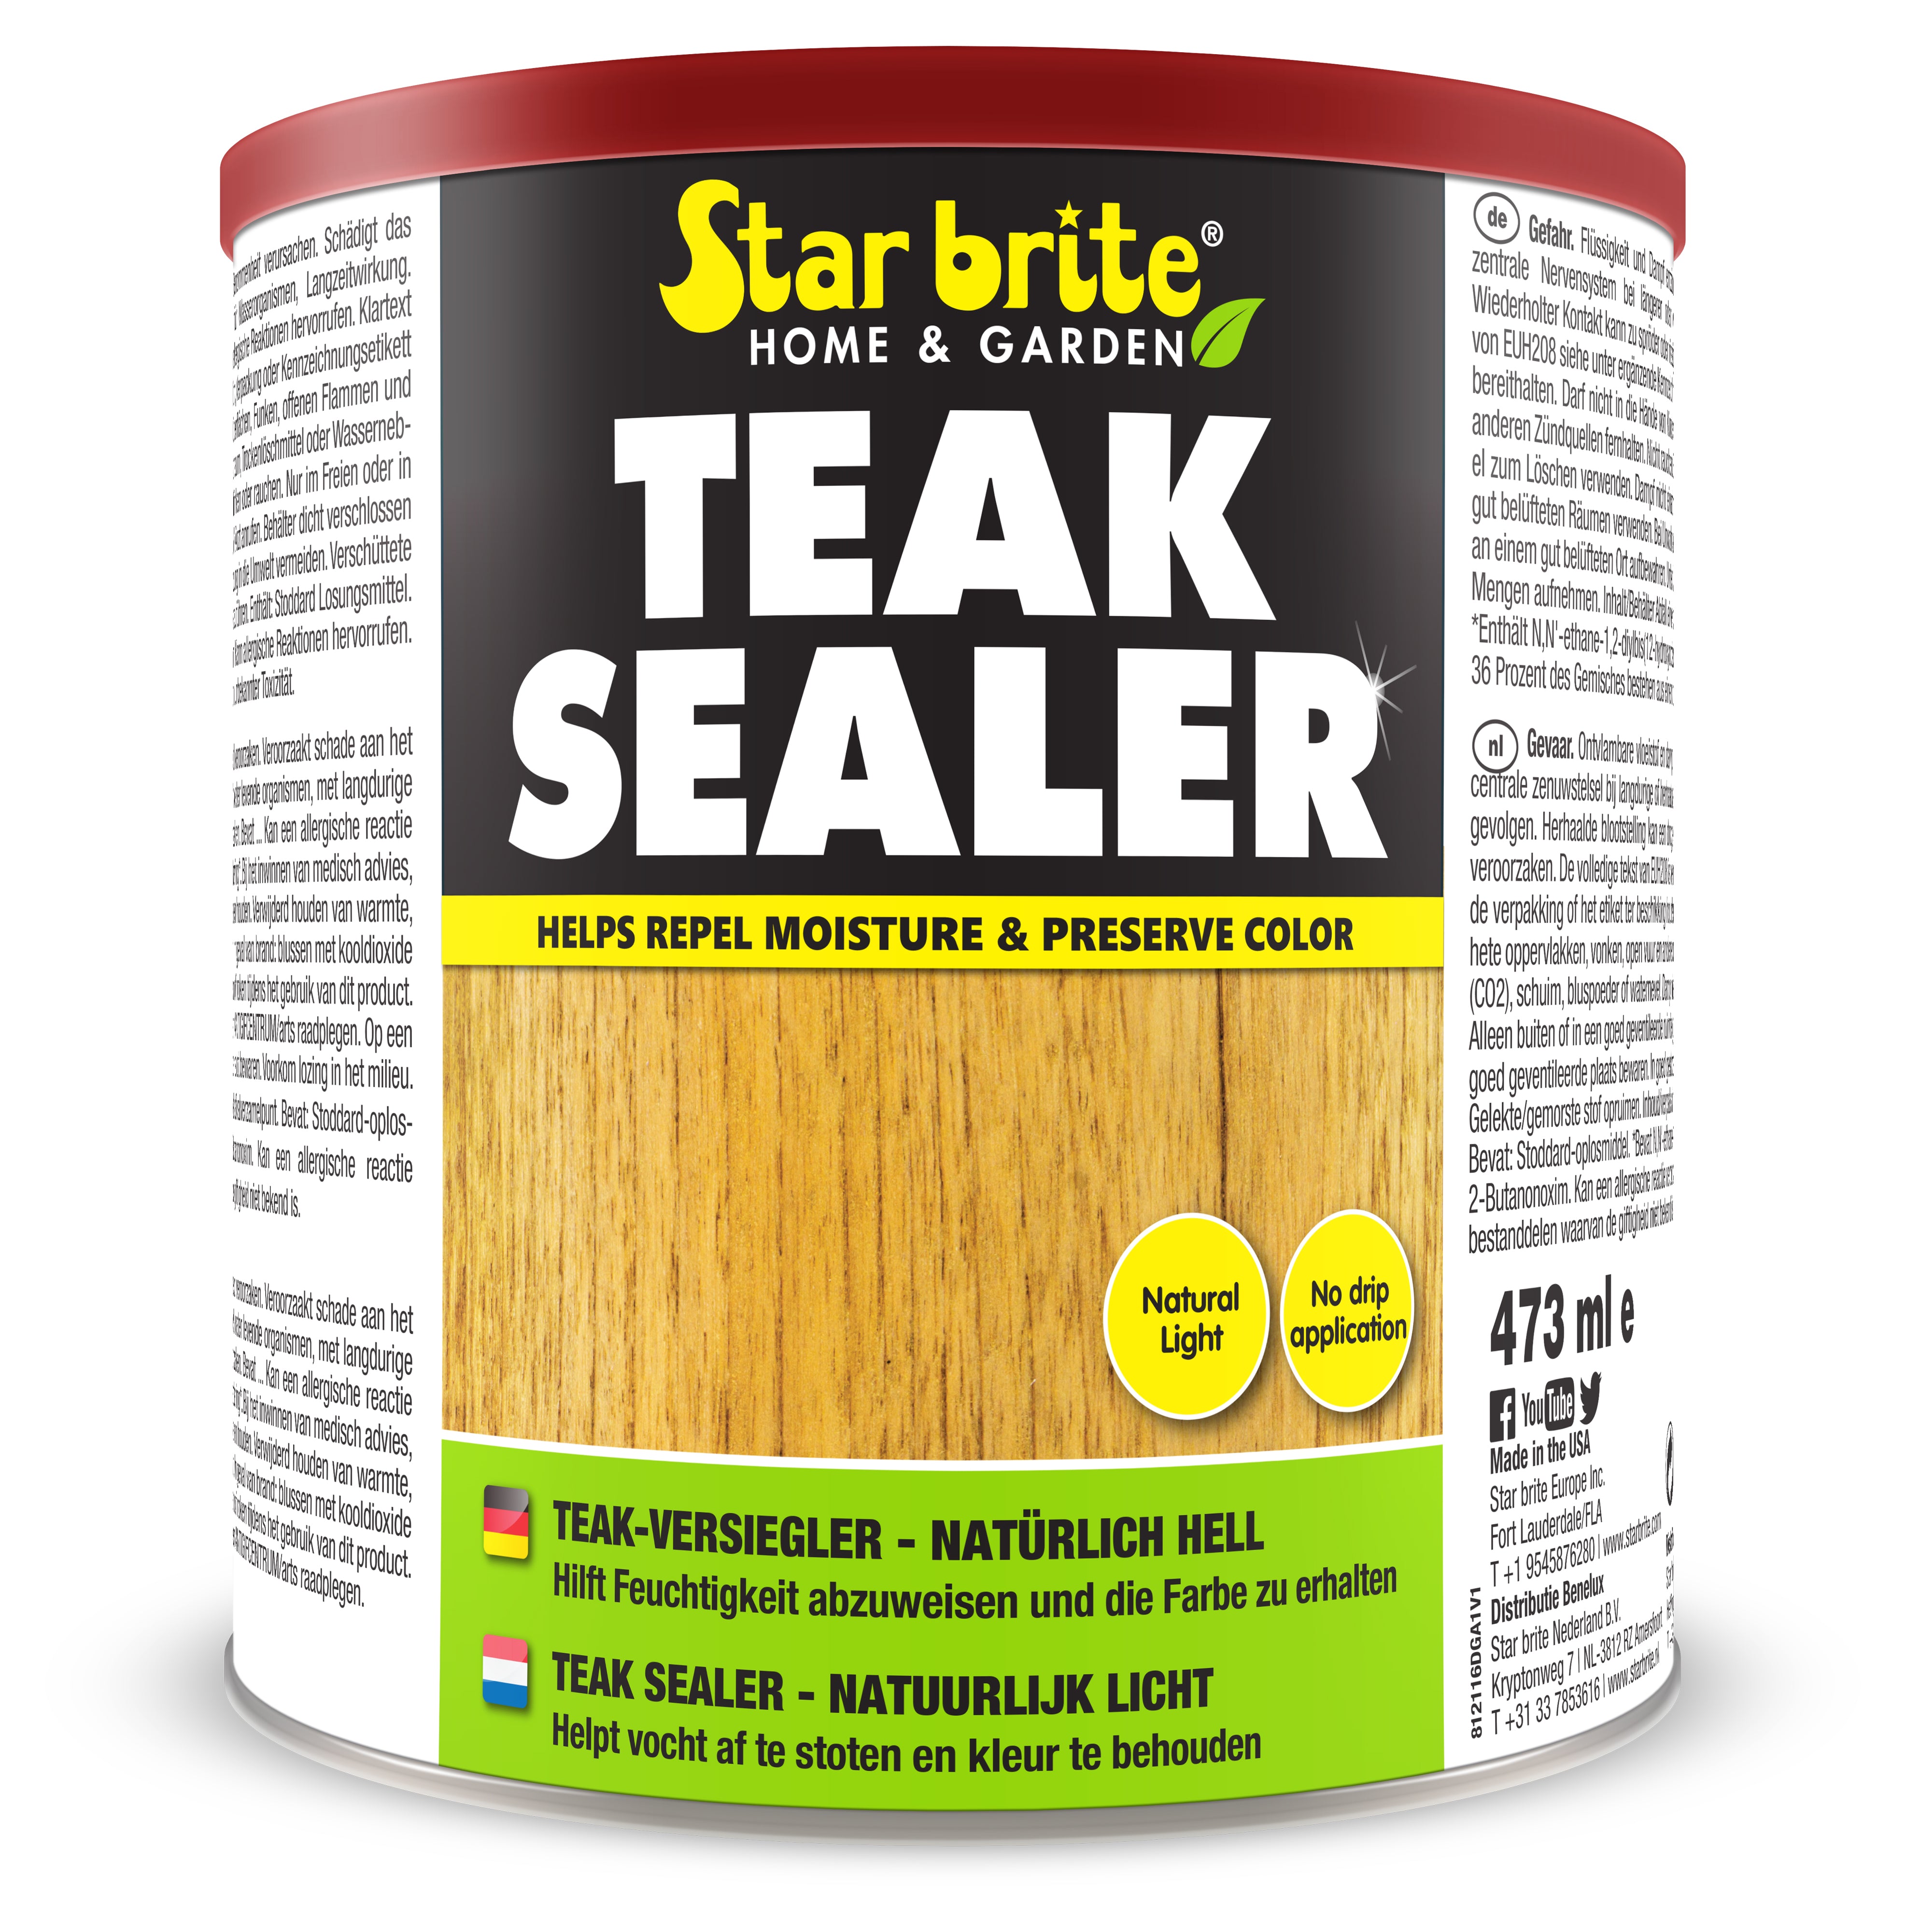 Star brite Teak Sealer - Natuurlijk Light 473 ml